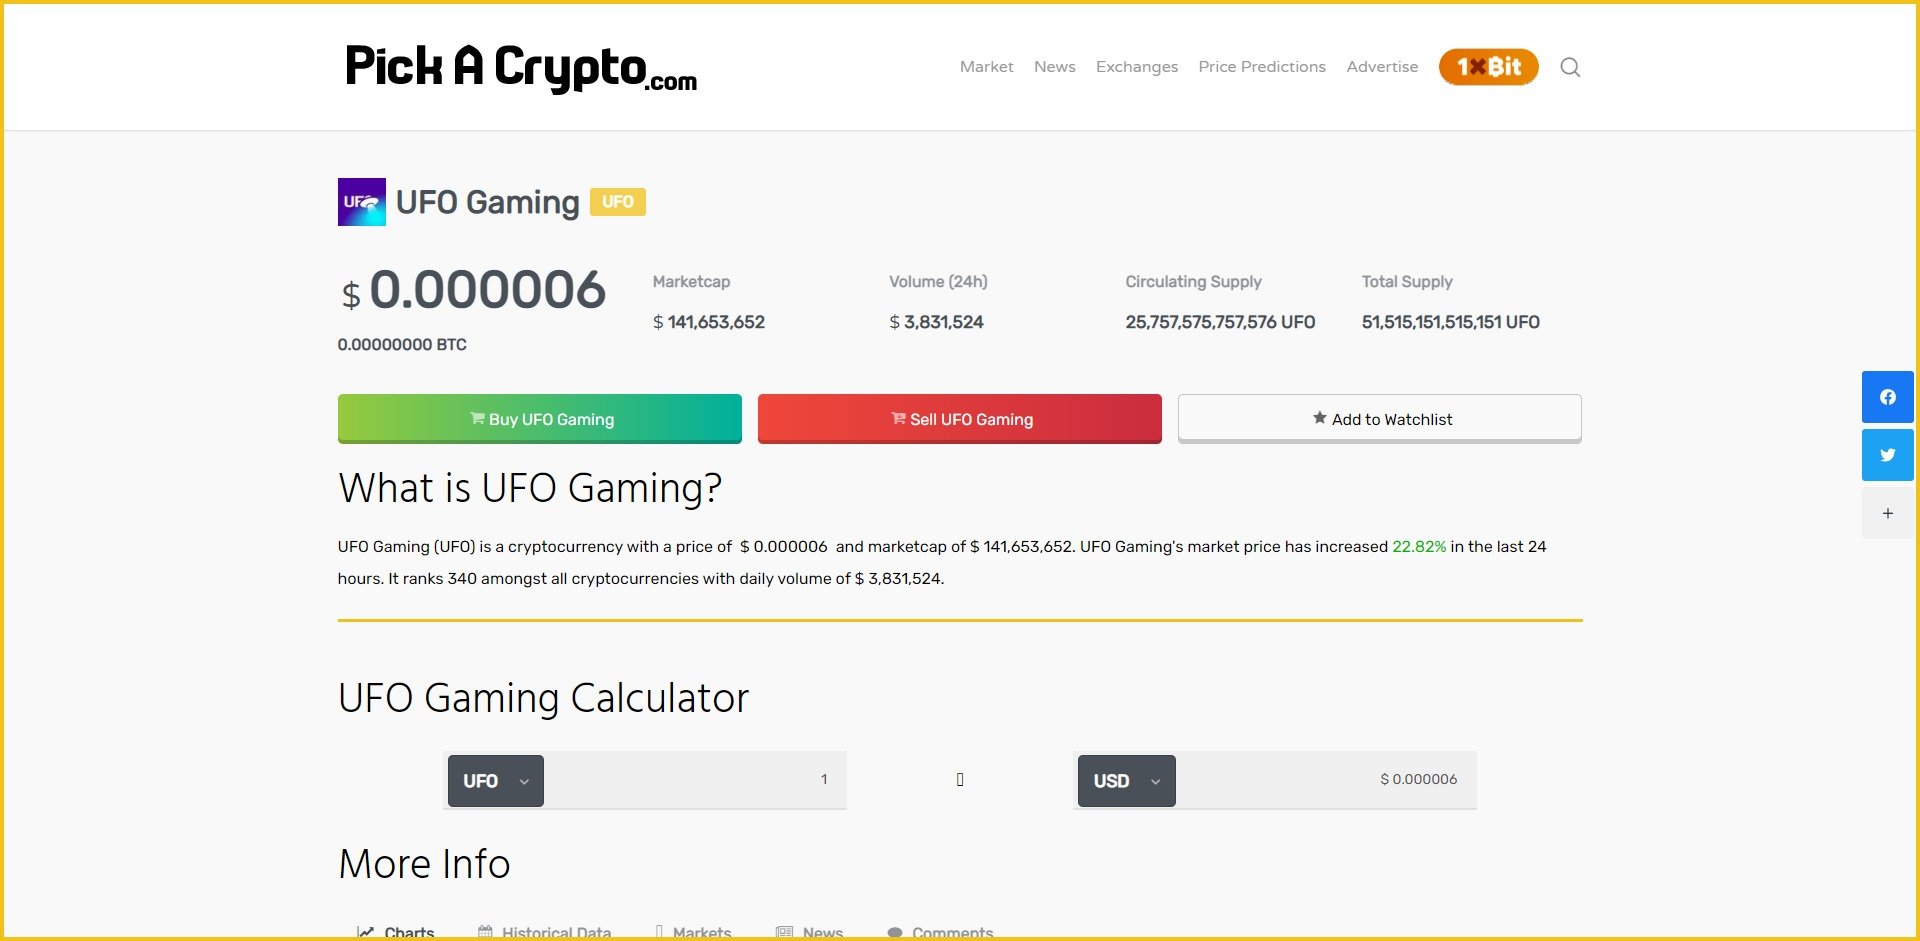 UFO Gaming Price Prediction Market